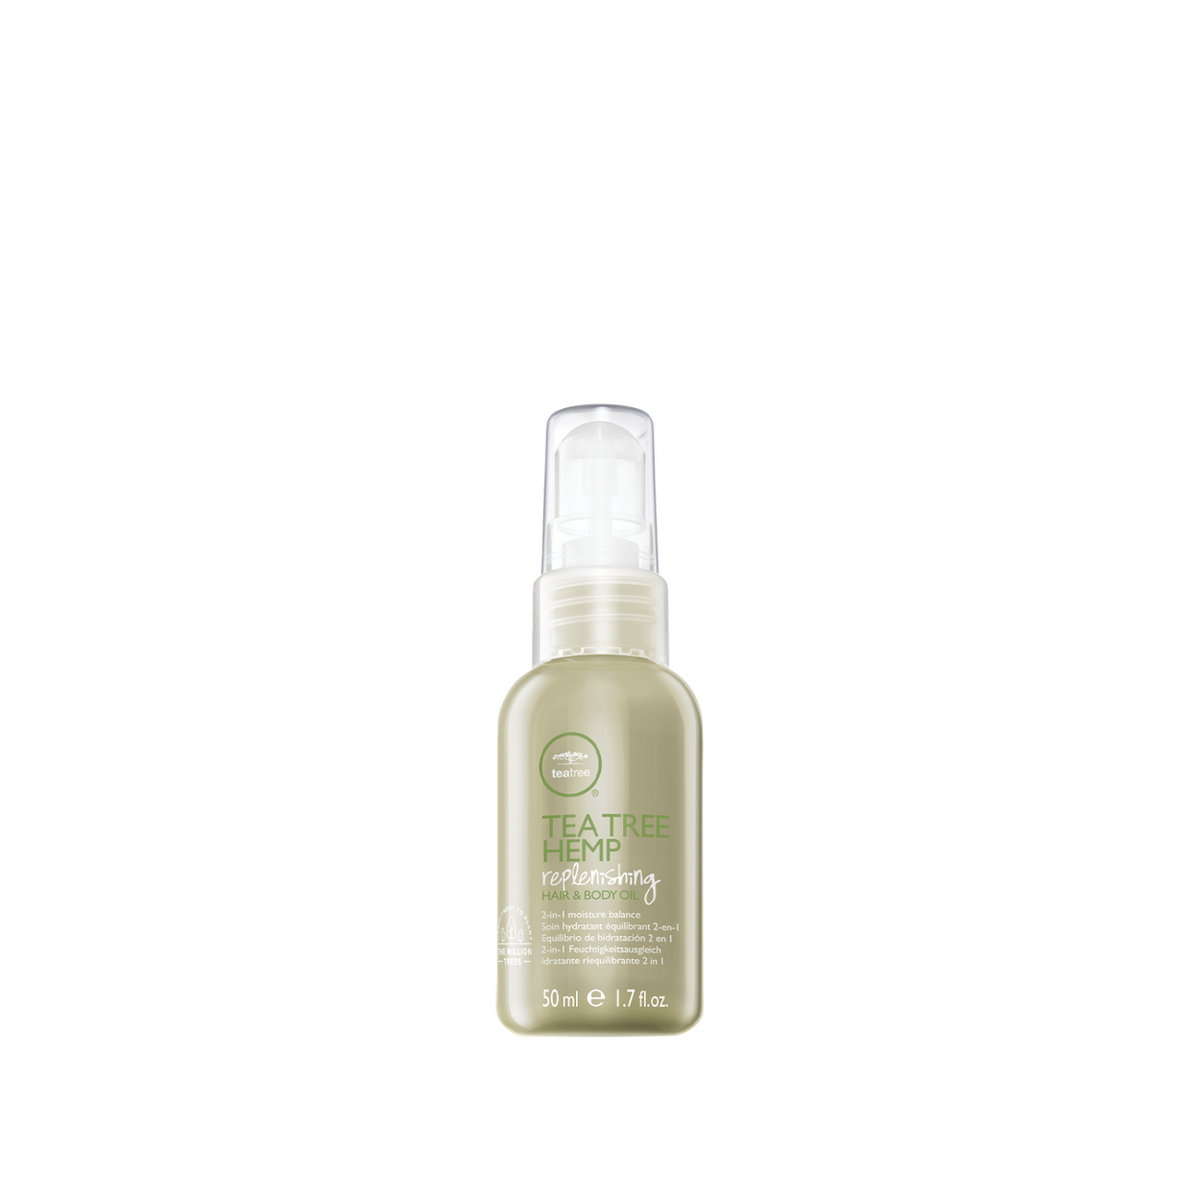 Tea Tree Hemp Replenishing Hair & Body Oil - 50ML - ProHair by Paul Mitchell